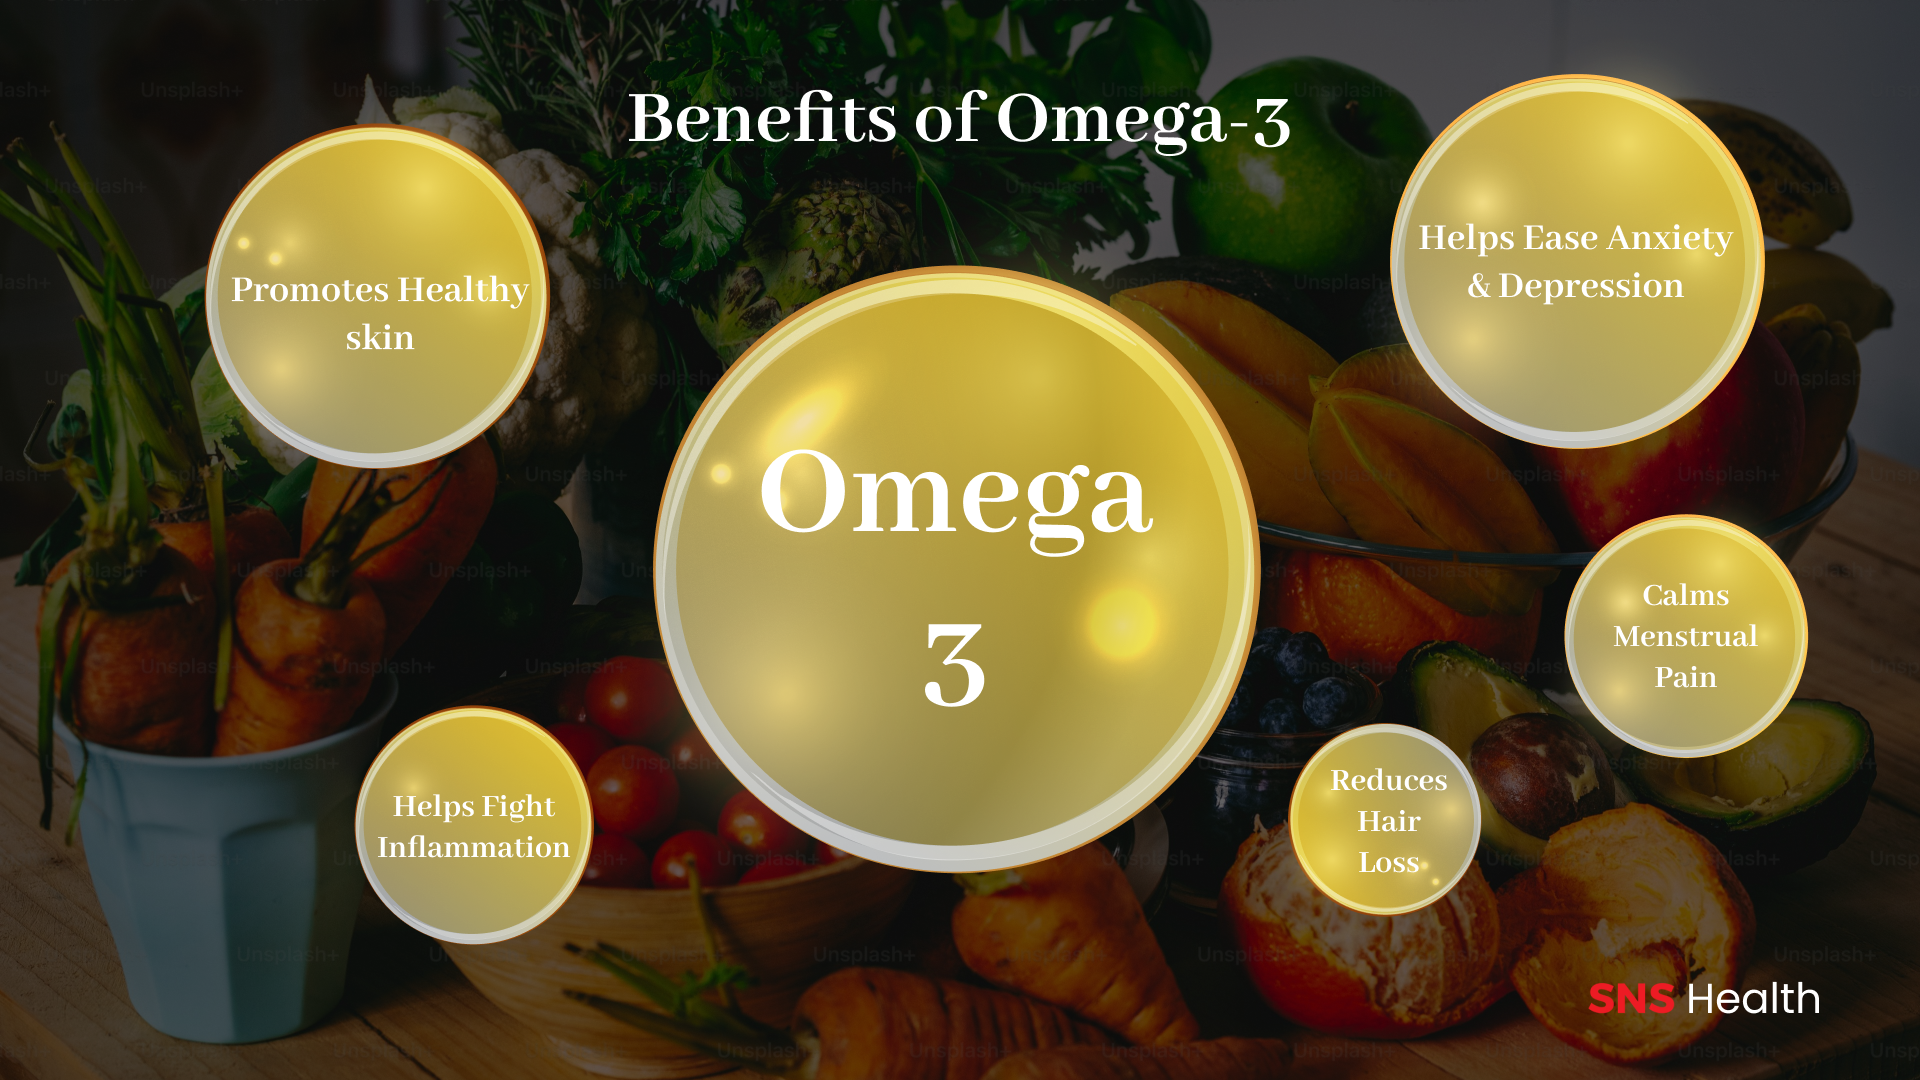 Benefits of Omega-3